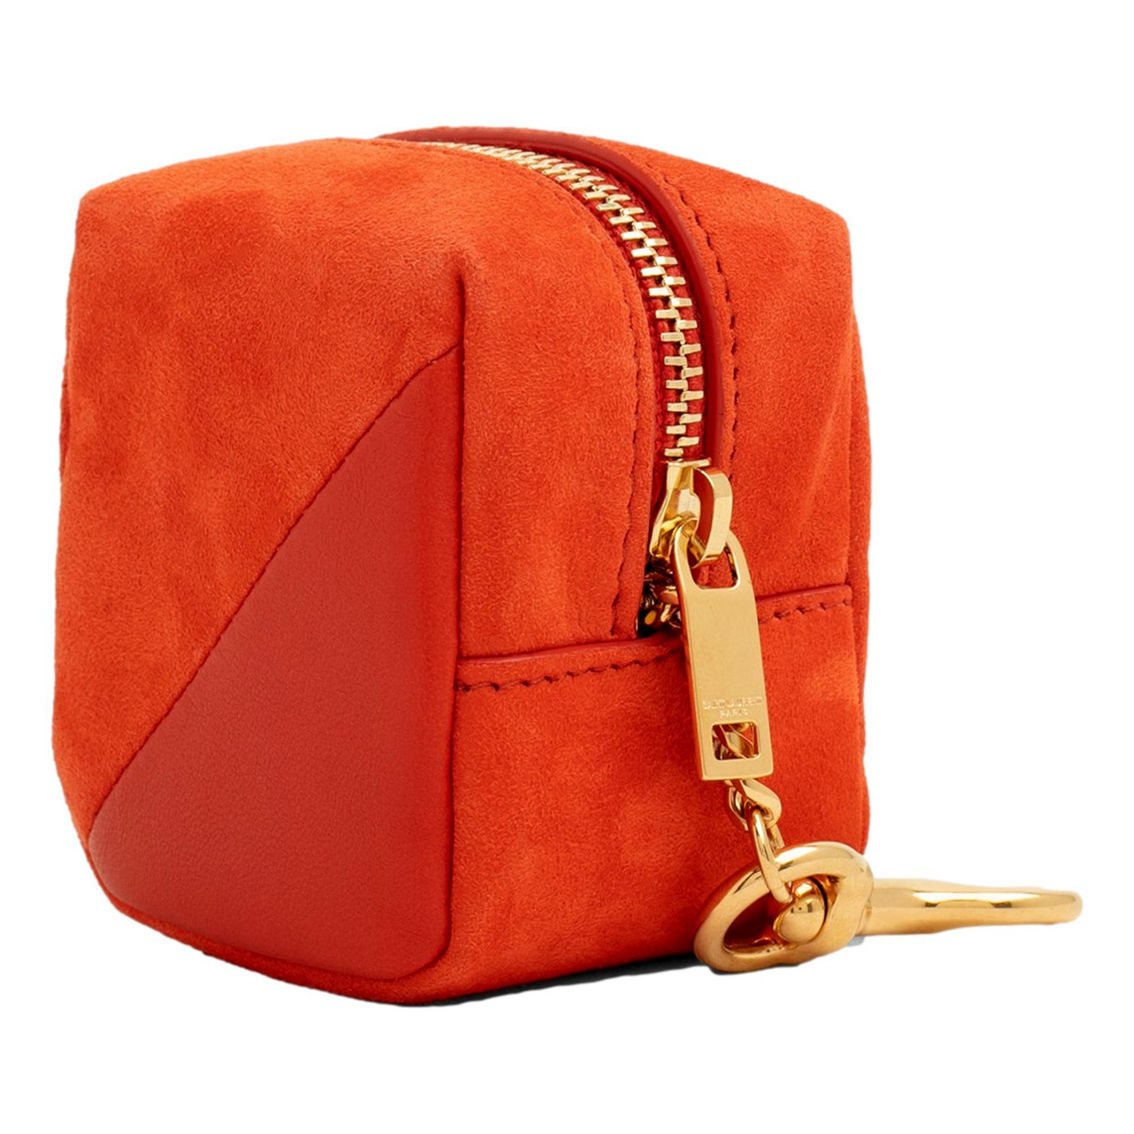 Saint Laurent Jamie YSL Keyring Cube Orange Suede Leather (New) - Image 2 of 4